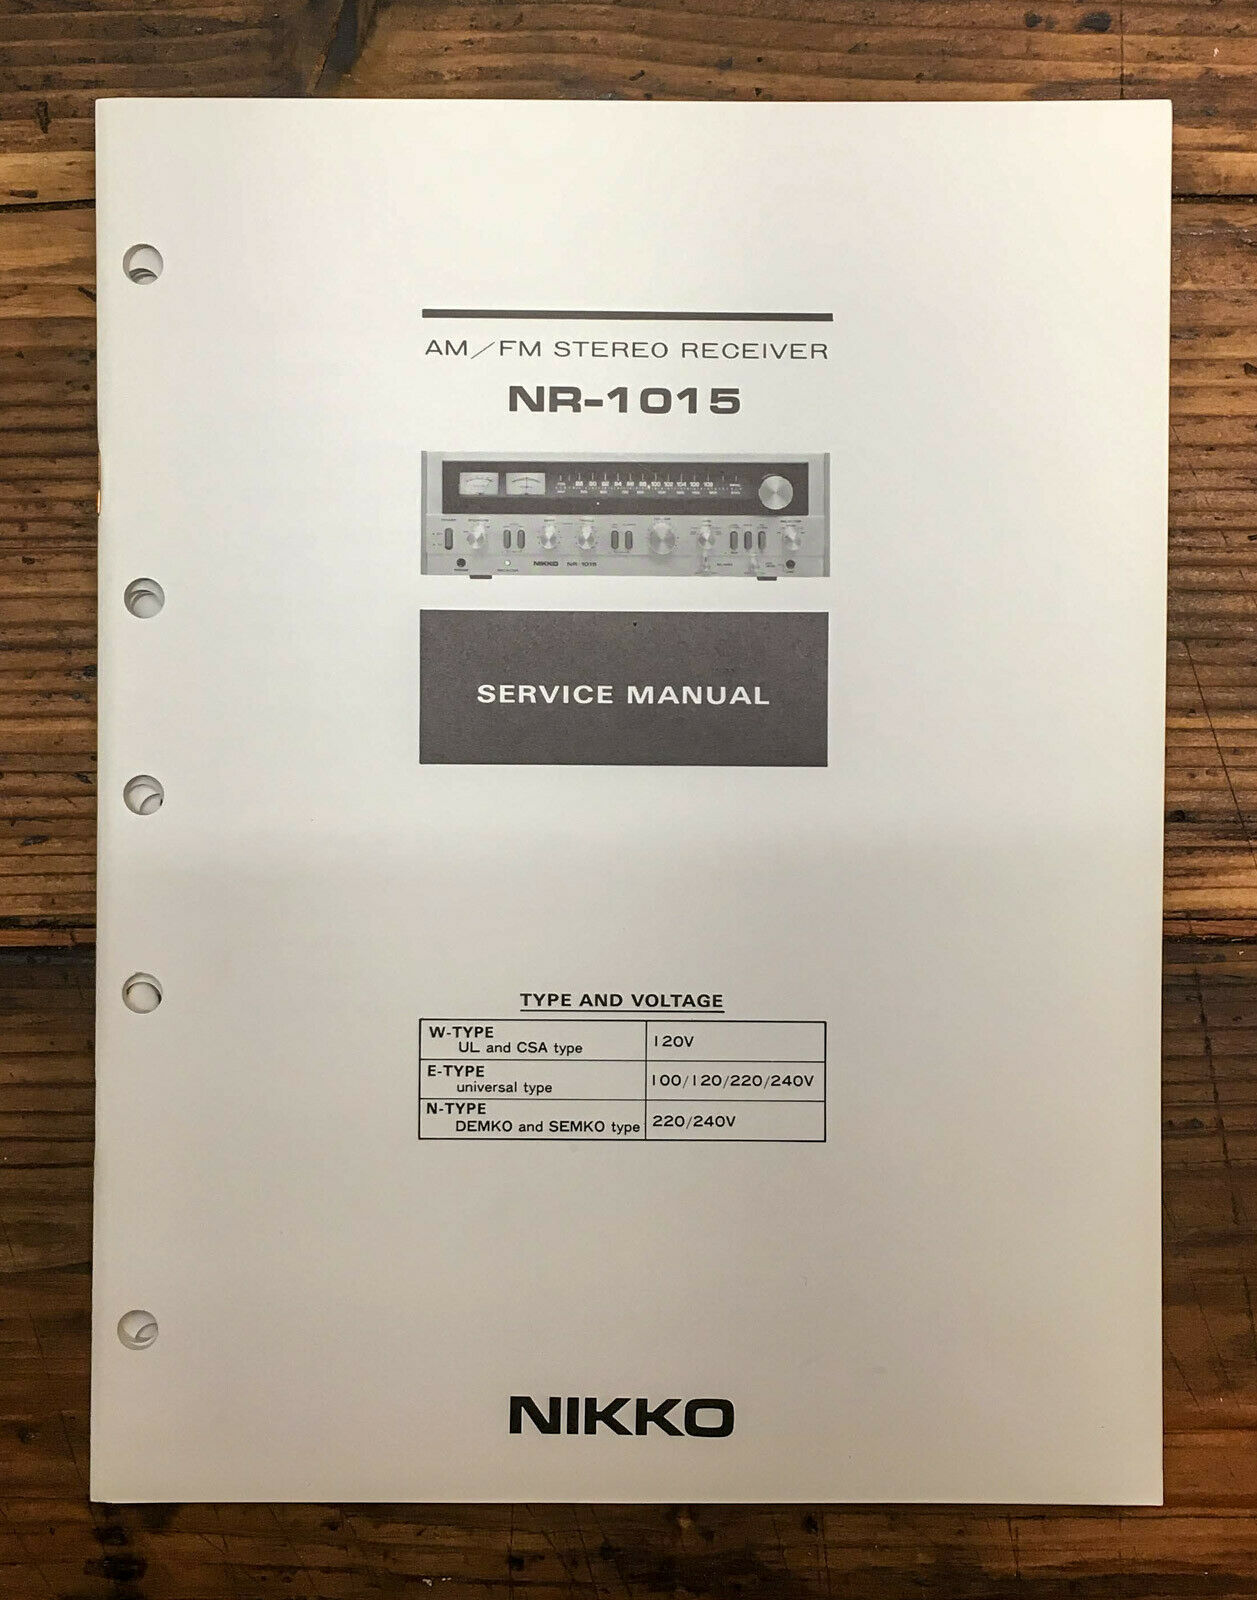 Used Nikko NR-1015 Receivers for Sale | HifiShark.com